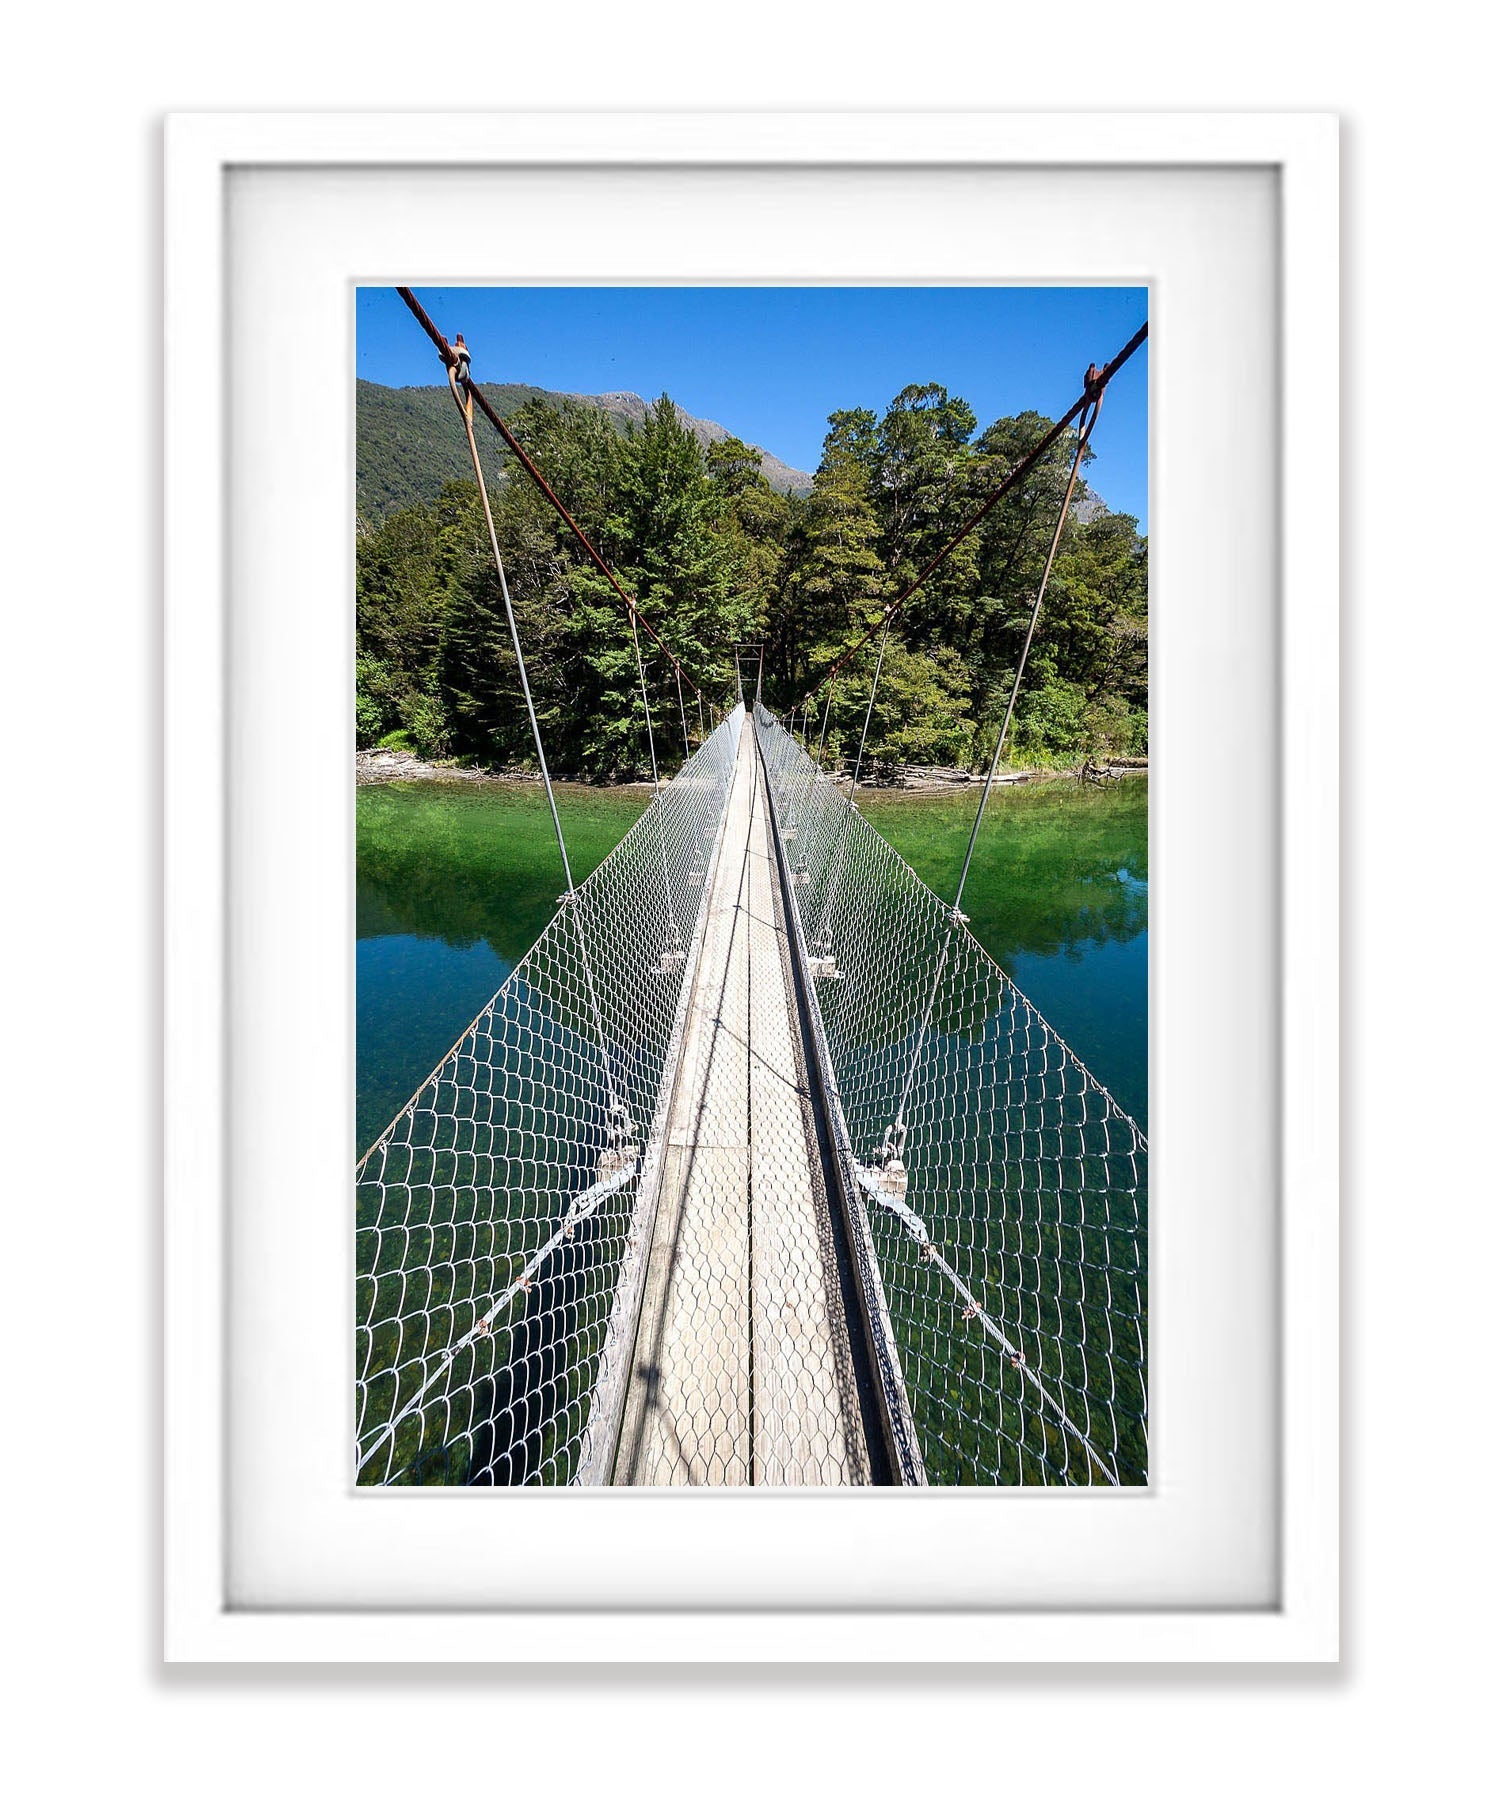 Swing Bridge across the Clinton River, Milford Track - New Zealand